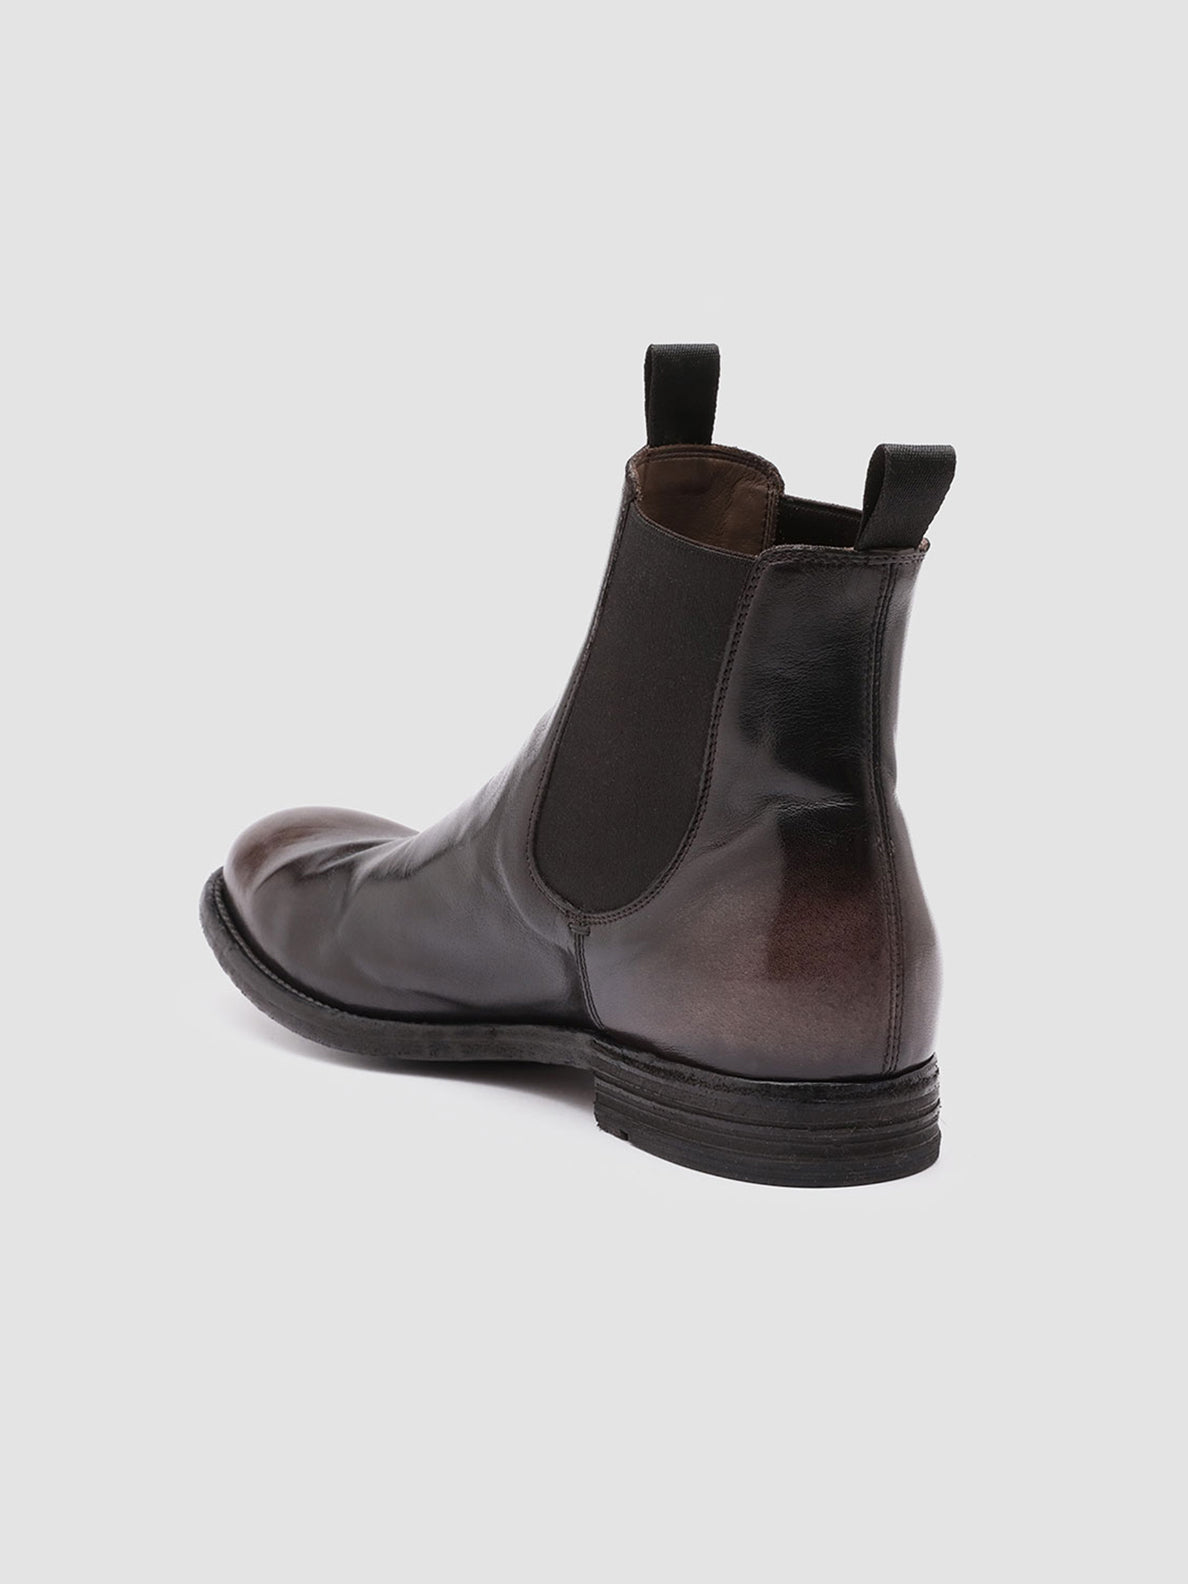 JOURNAL 005 Ferro Supernero - Leather Chelsea Boots